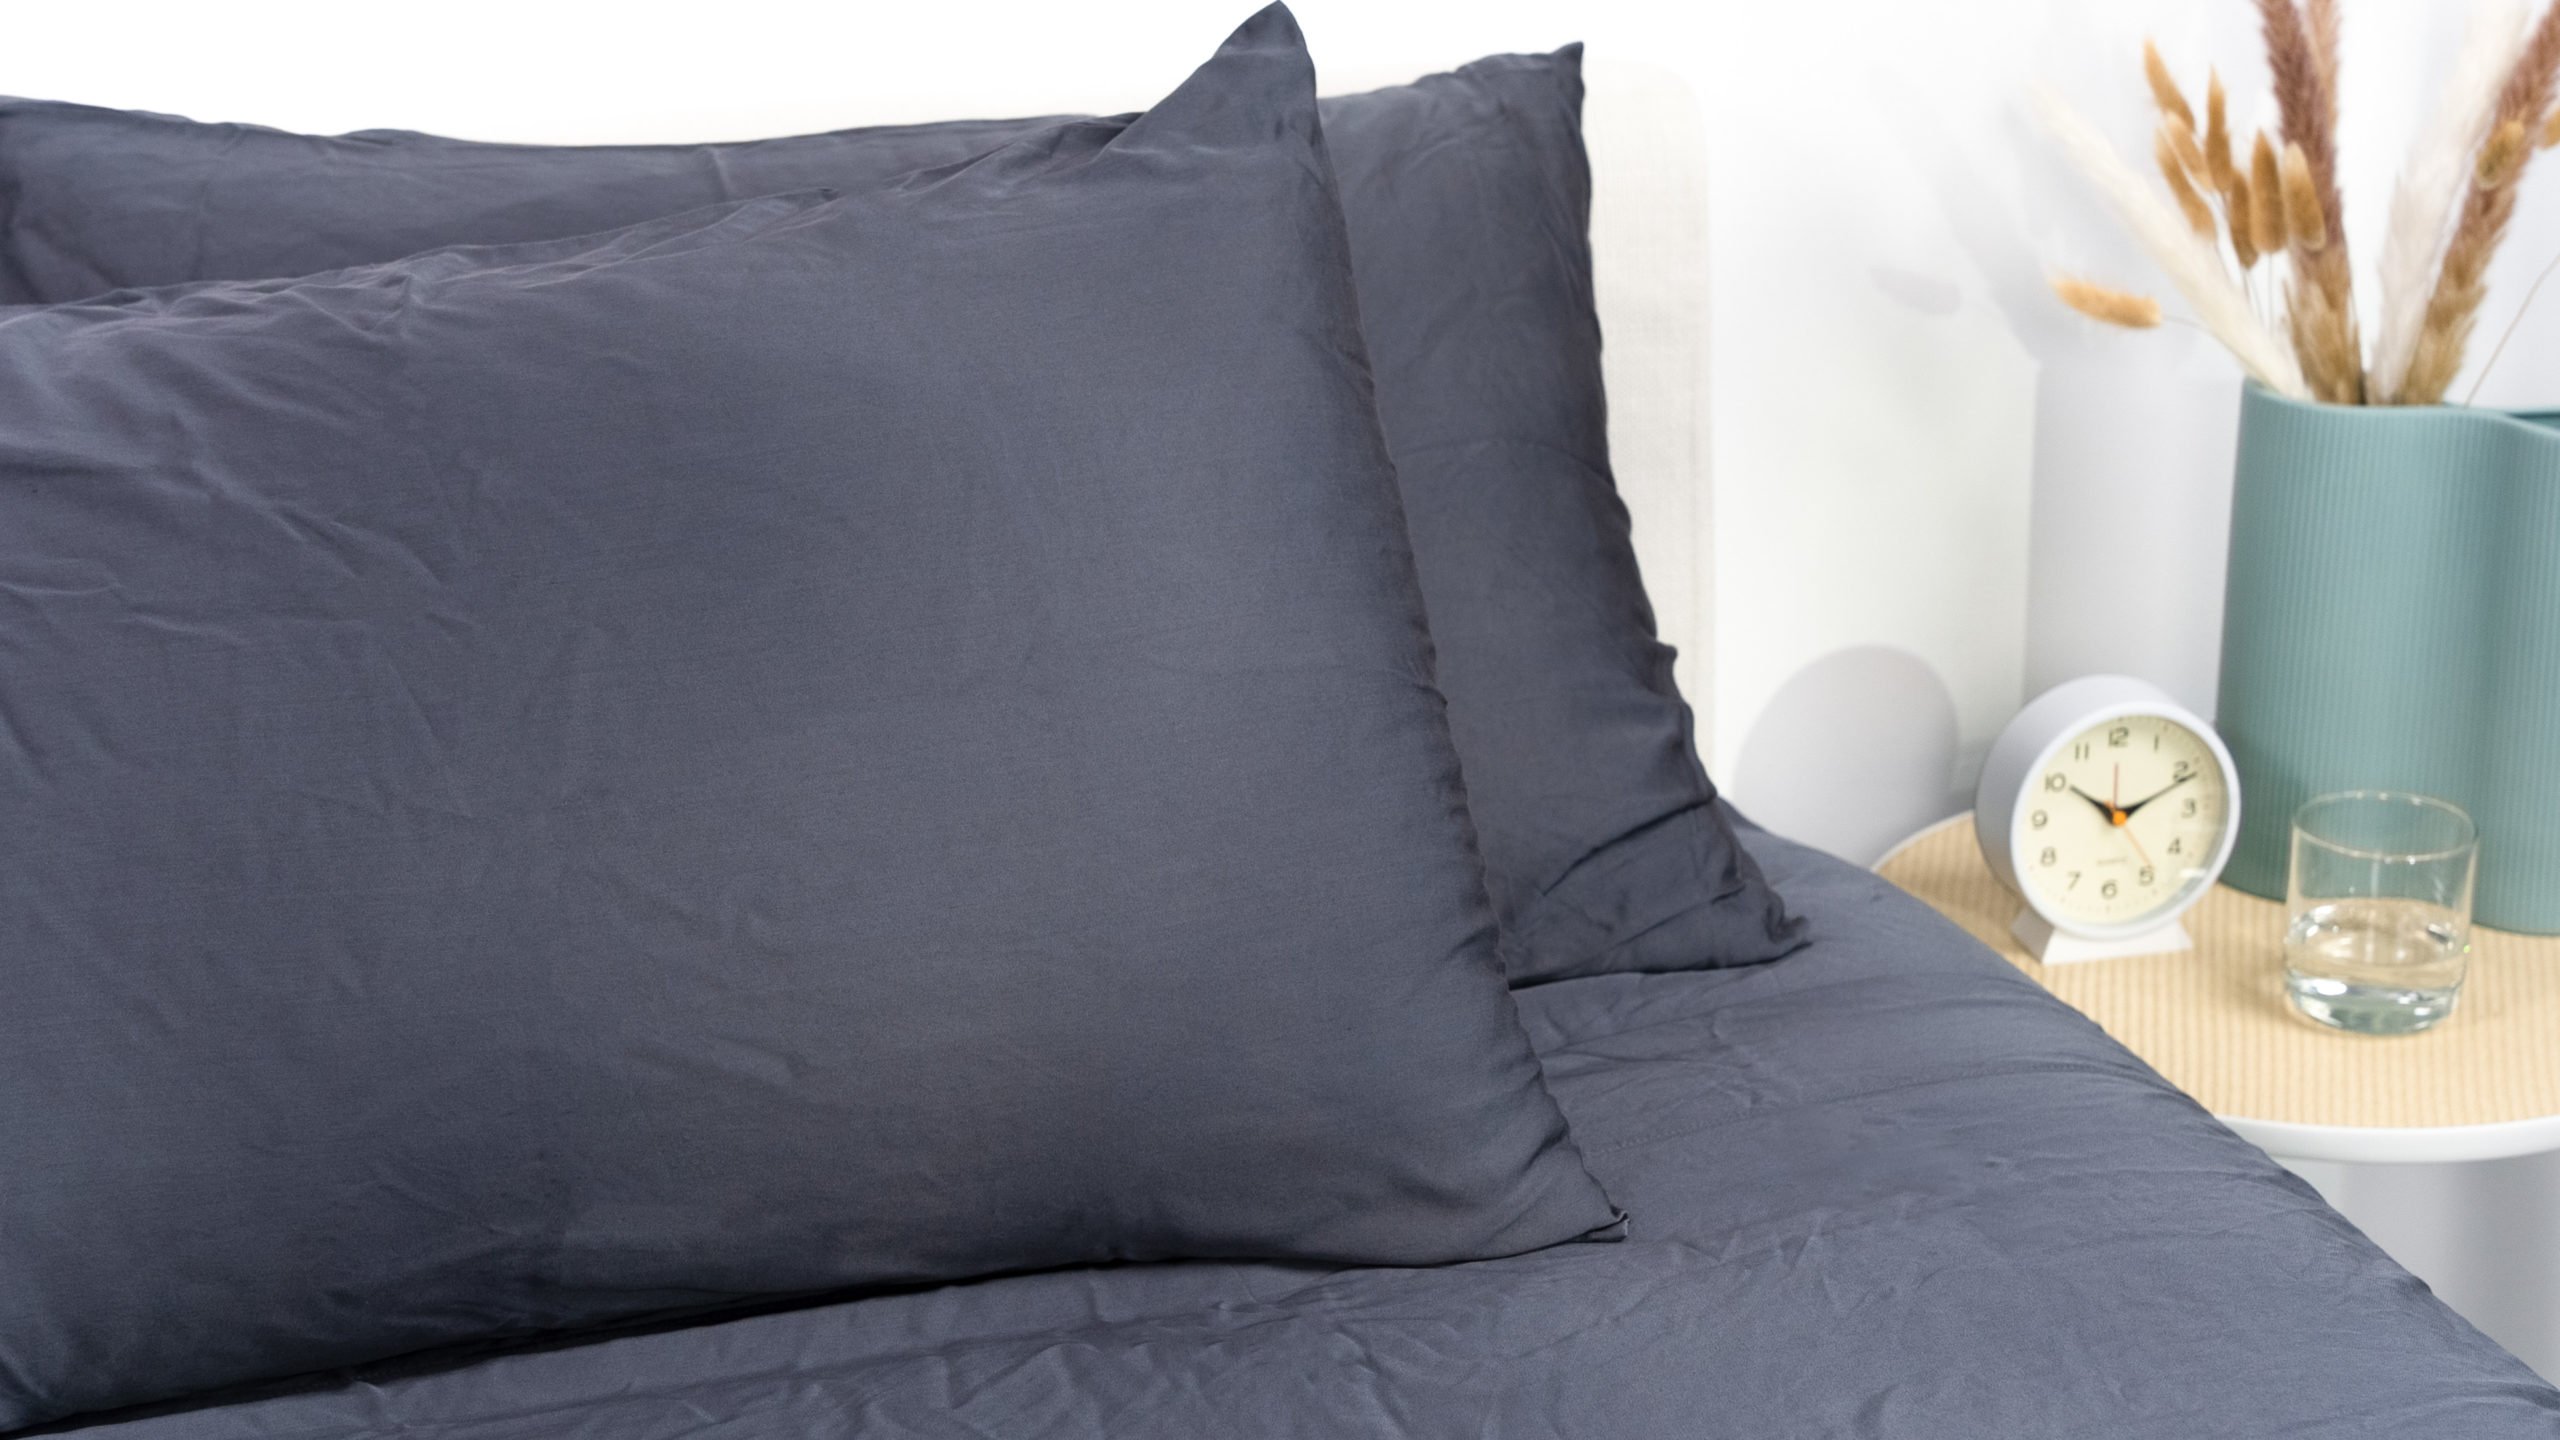 LV Complete Bedding Set - 1 Duvet Comforter, 1 Bed Spread & 4 Pillow Cases